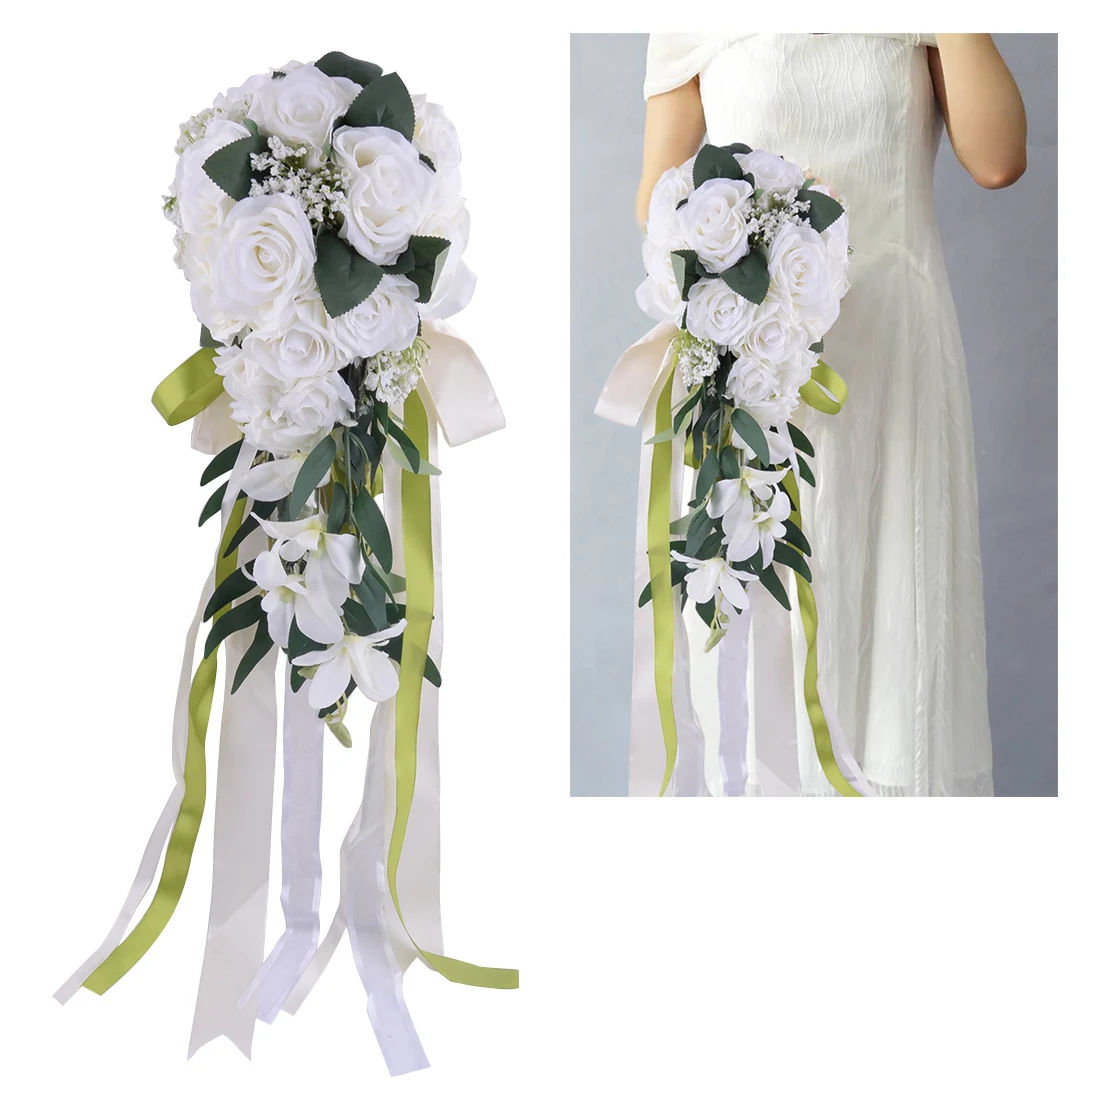 

Romantic White Wedding Hand Bouquet Bridal Holding Artificial Flowers Cloth 45x19cm For Floral Arrangements Photography Props